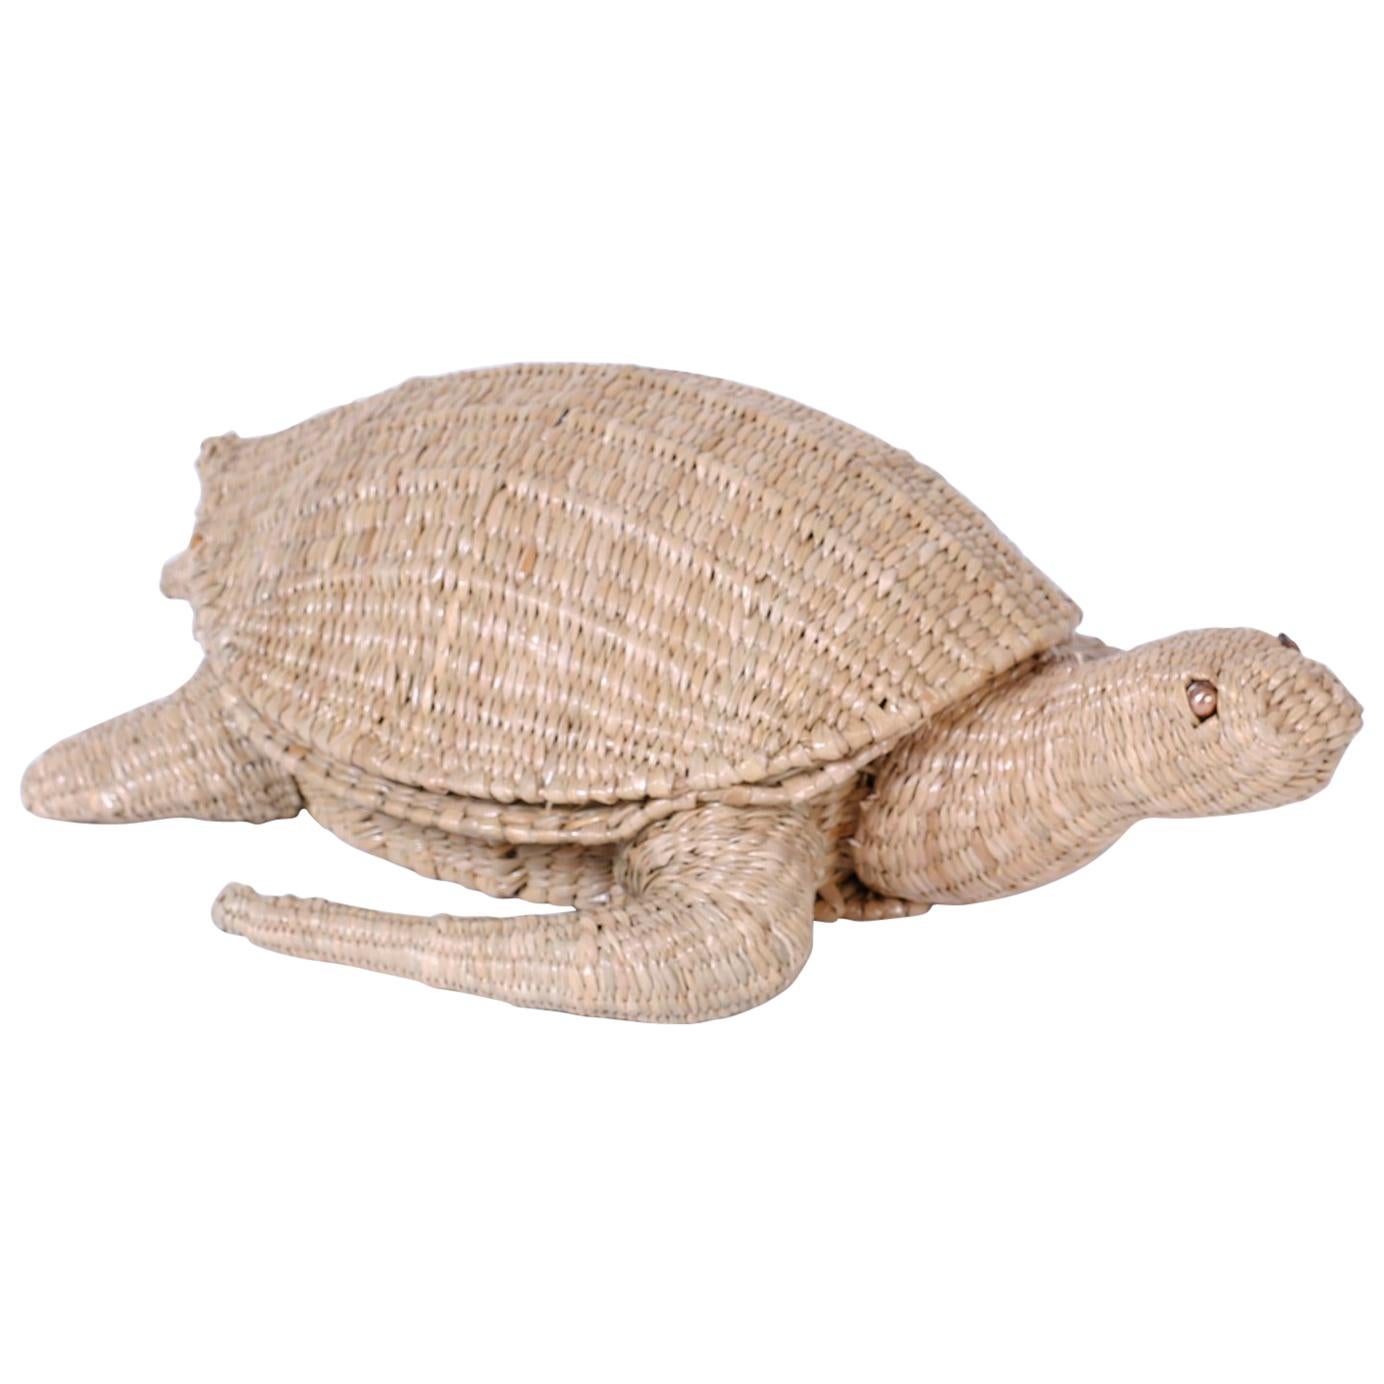 Midcentury Mario Torres Wicker Turtle